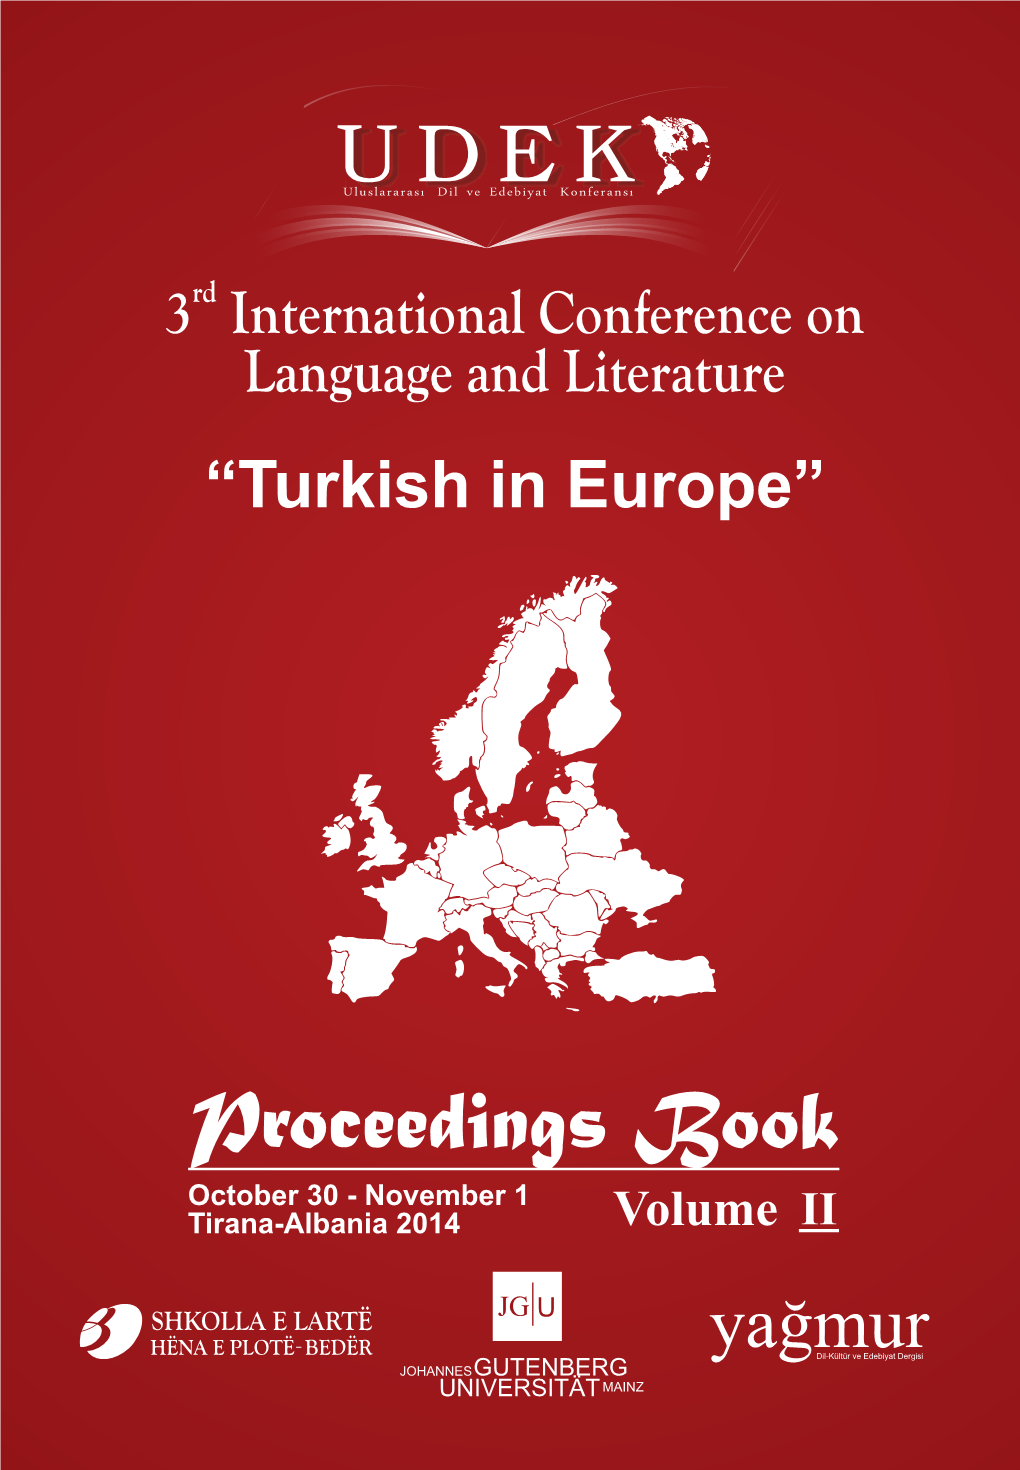 Proceedings Book “Turkish in Europe” October 30 - November 1 Tirana-Albania 2014 Volume II